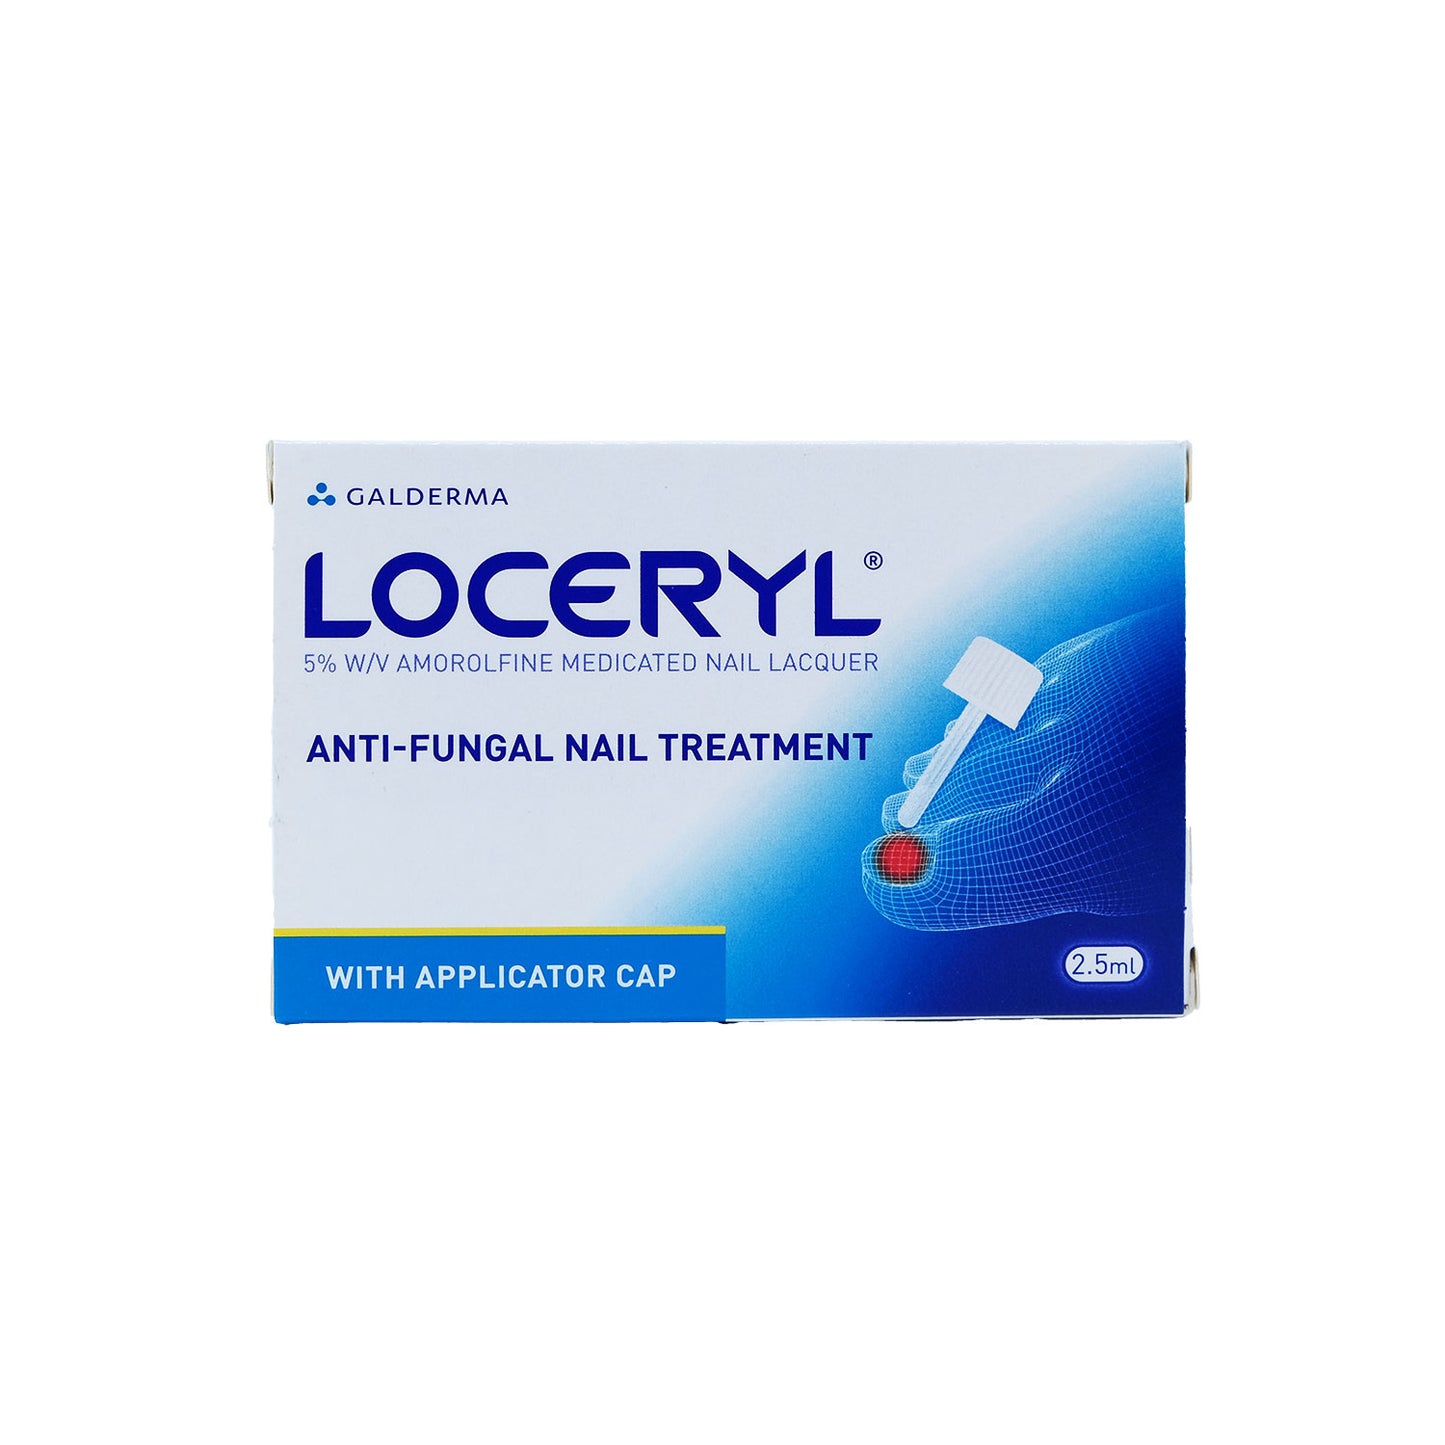 Loceryl 5% W/V Amorolfine Medicated Nail Lacquer 2.5ml